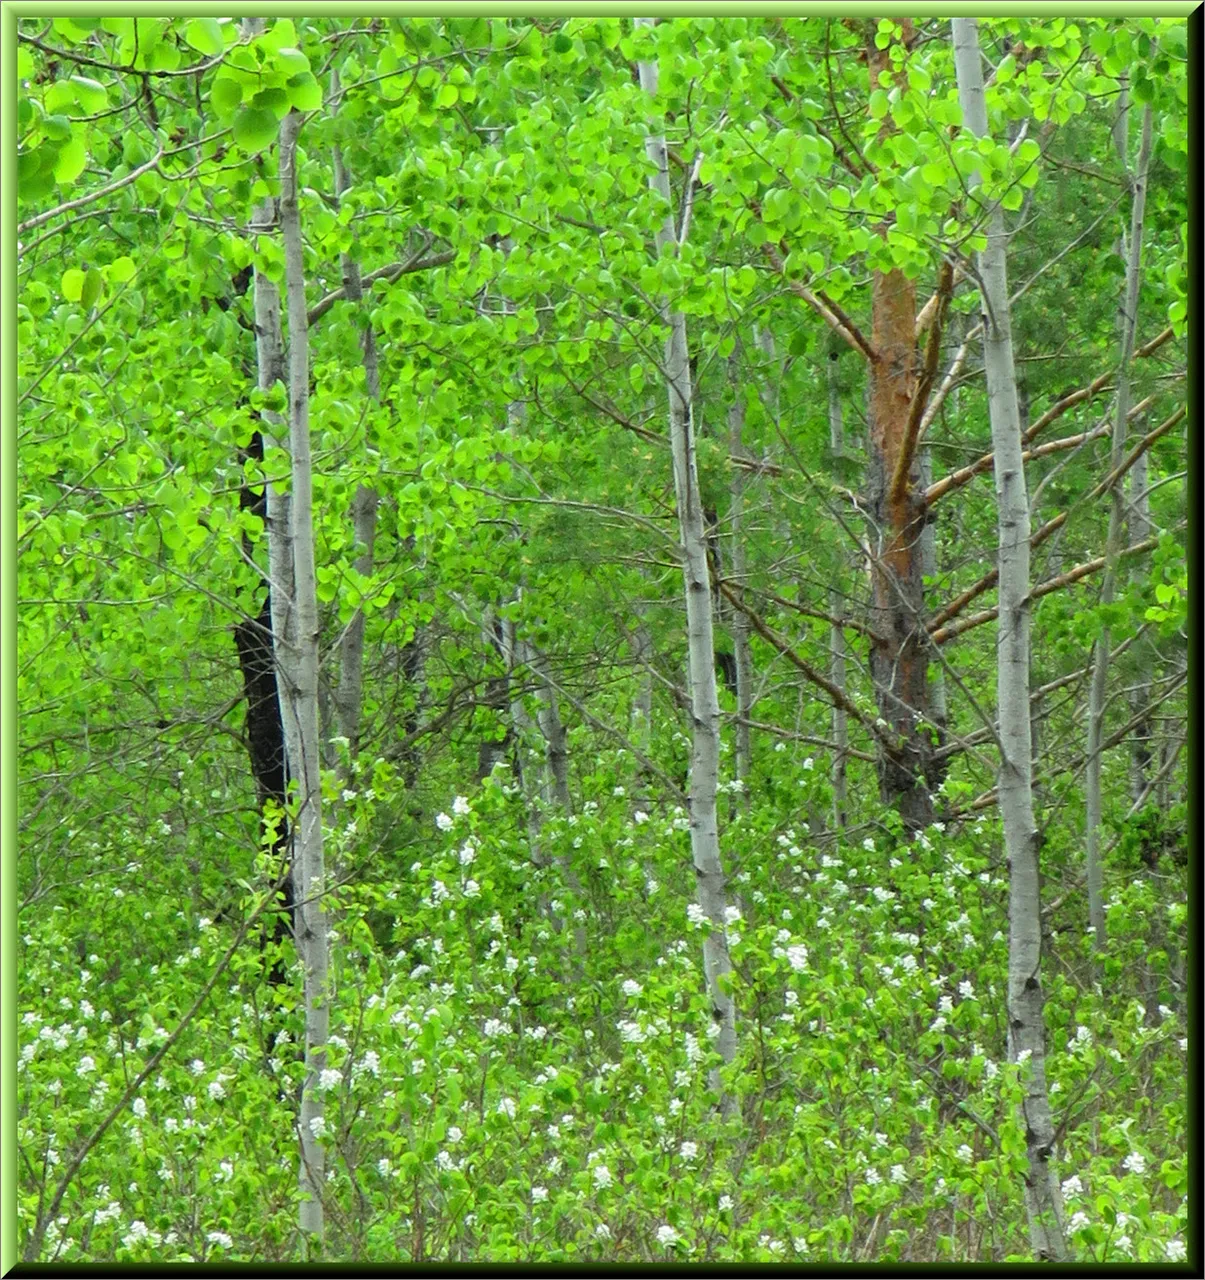 Saskatoon bushes in full bloom by lush green poplar trees.JPG